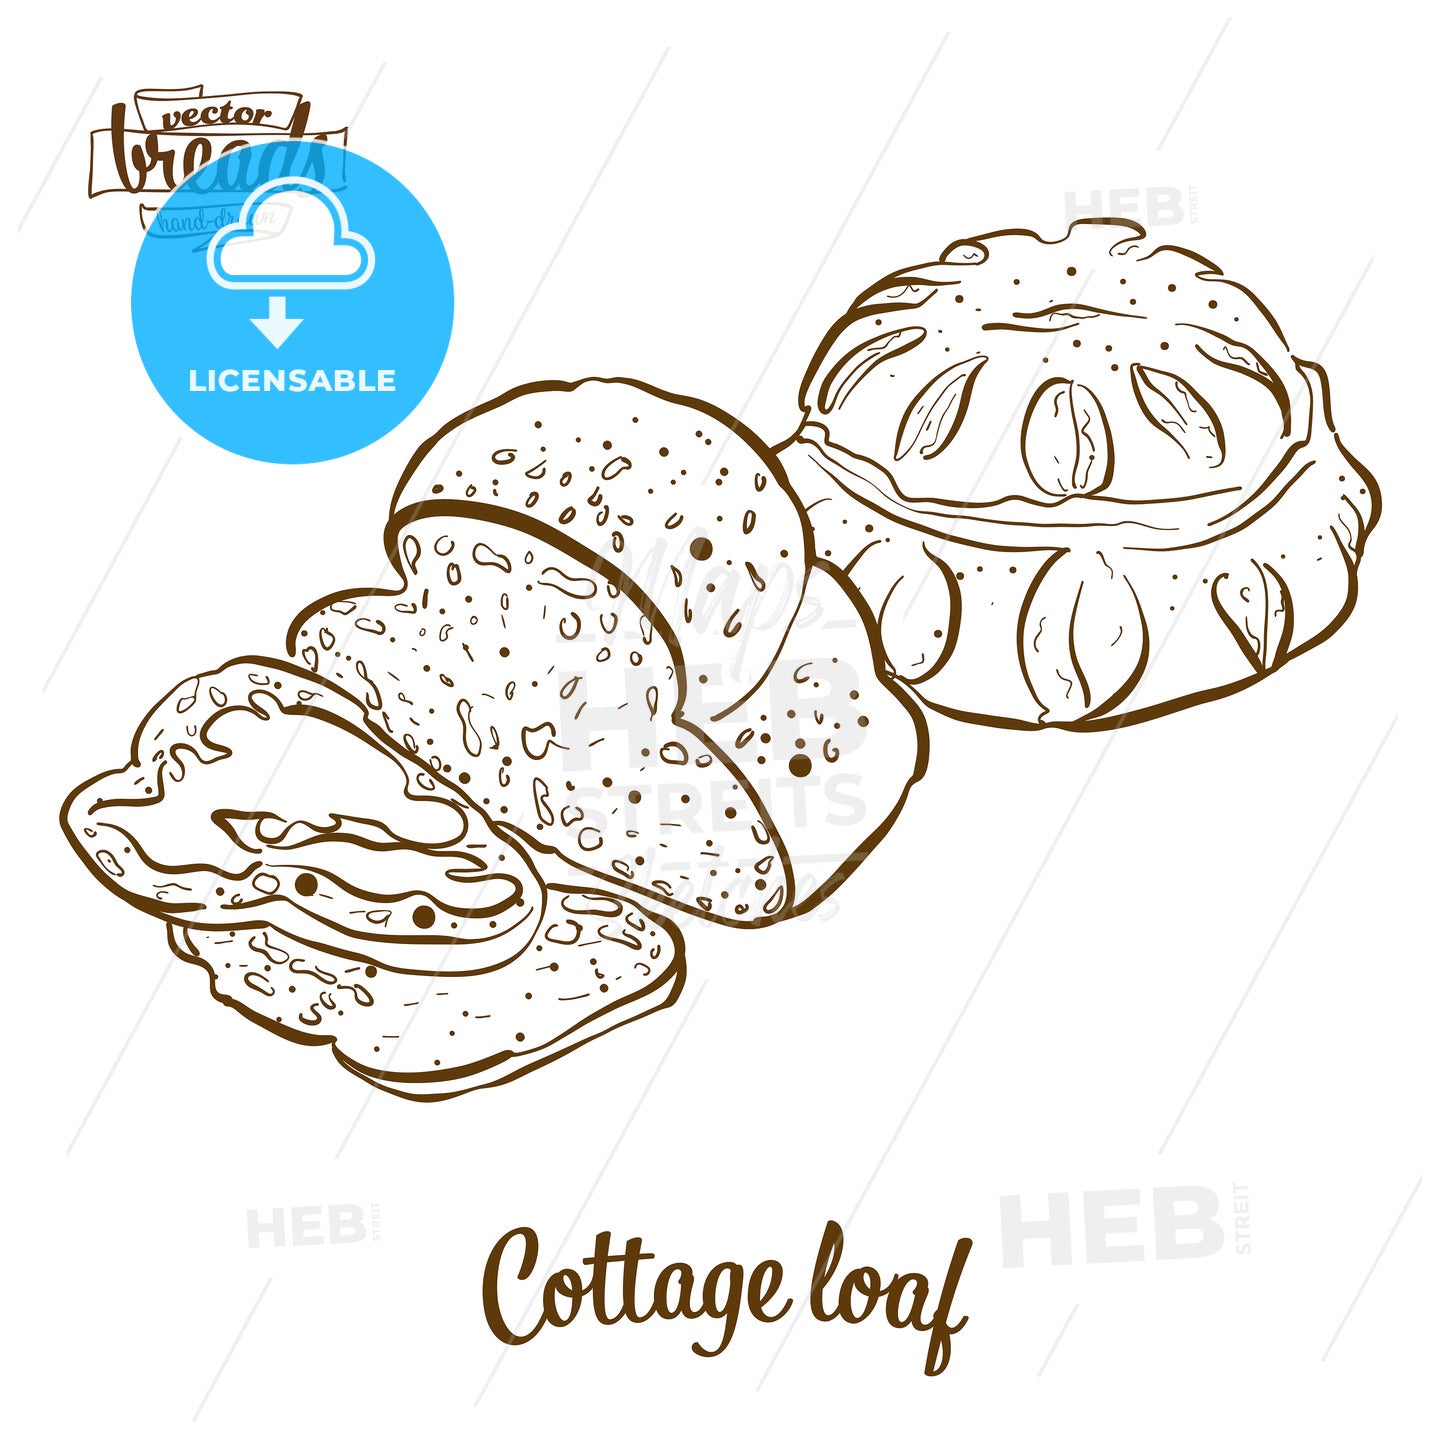 Cottage loaf bread vector drawing – instant download